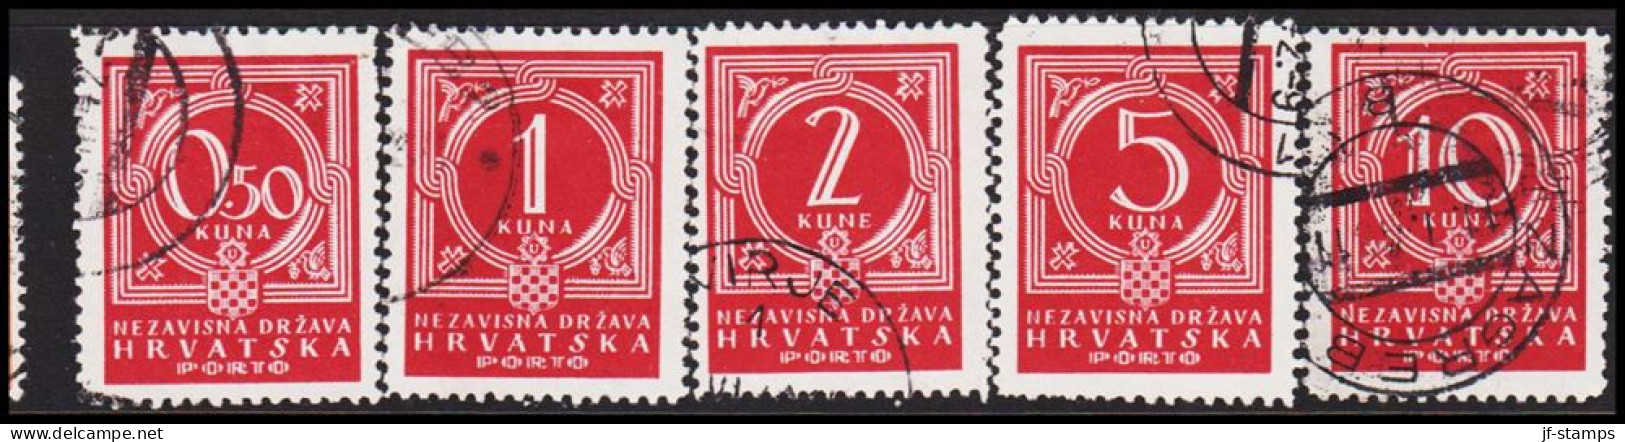 1941. HRVATSKA NEZAVISNA DRZAVA HRVATSKA (SHIELD) Overprint On 5 D. (Michel PORTO 6-10) - JF546039 - Croatia